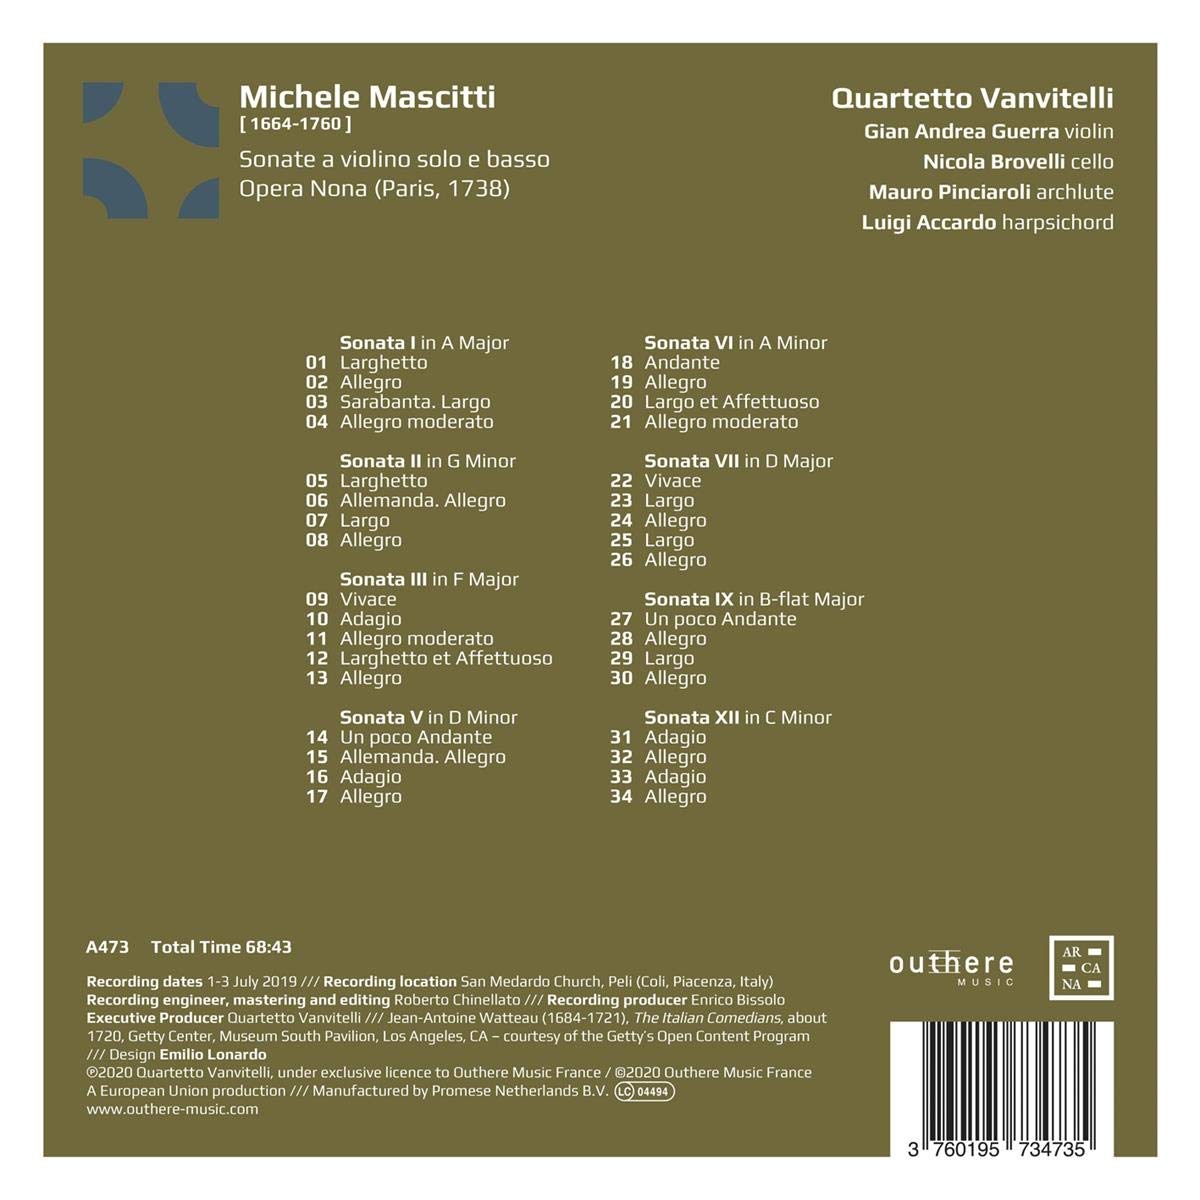 Quartetto Vanvitelli 마시티: 바이올린 소나타 (Michele Mascitti: Violin Sonata Op.9)